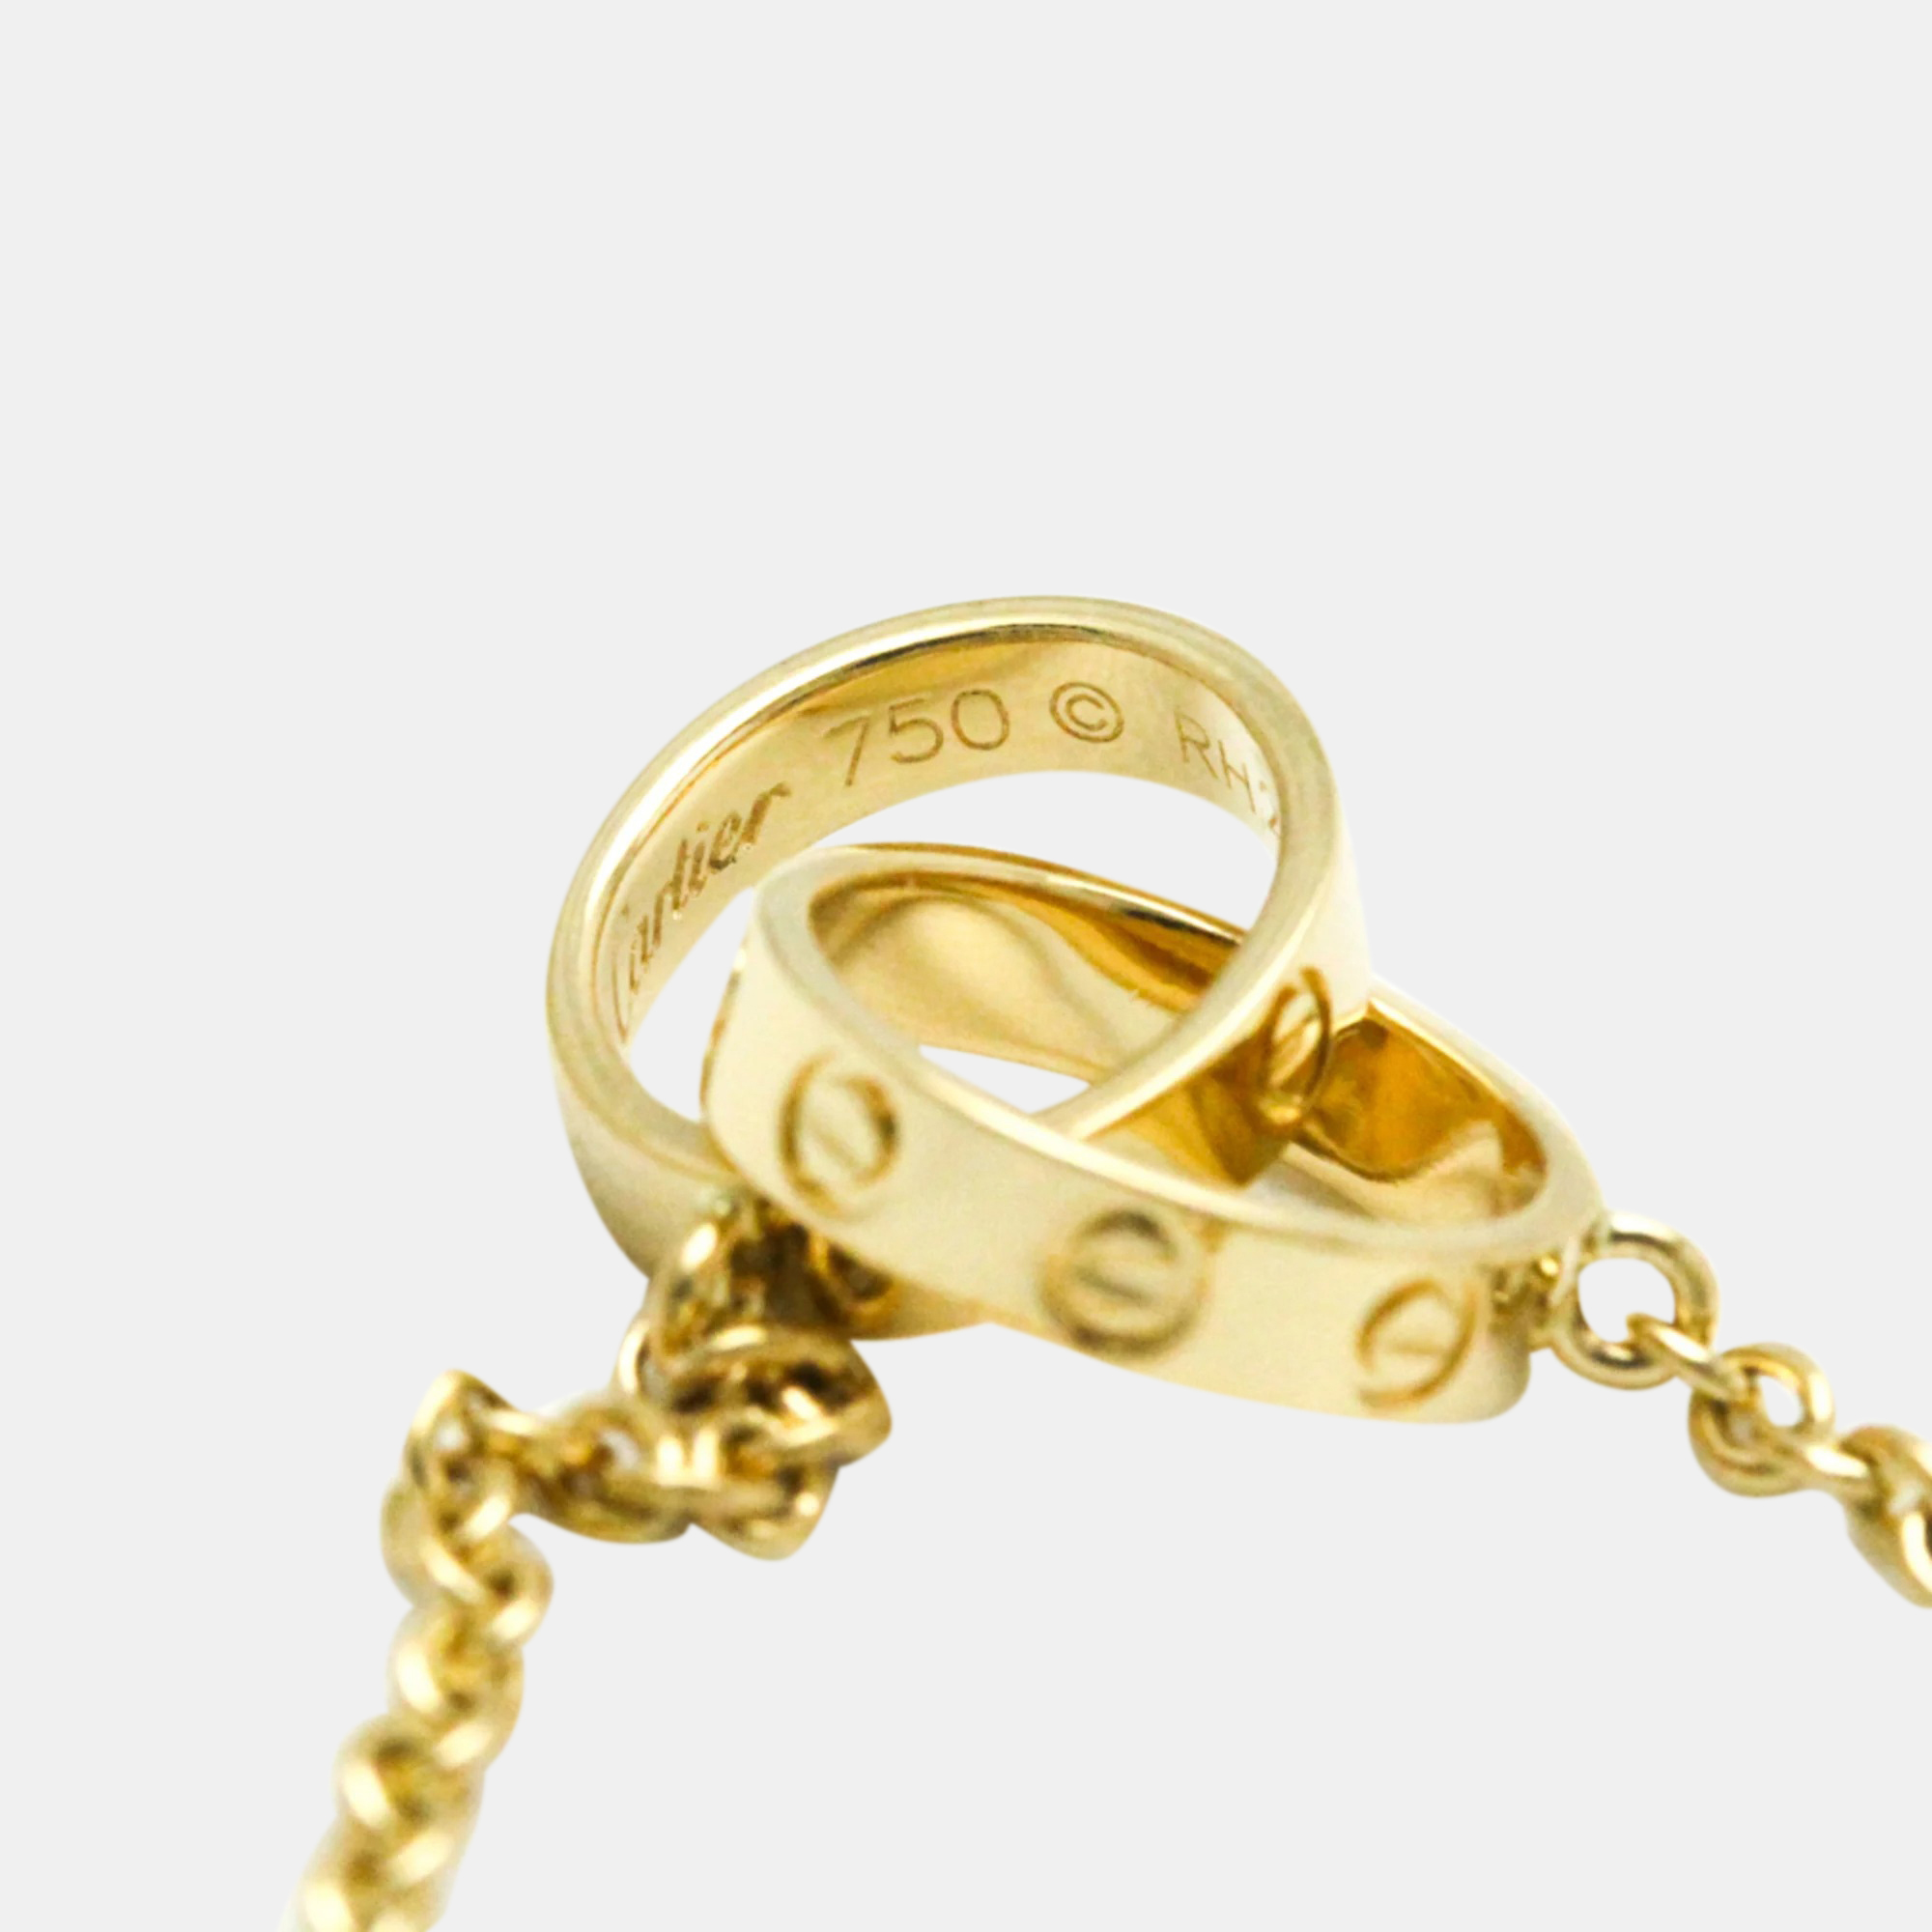 Cartier 18K Yellow Gold Love Chain Bracelet